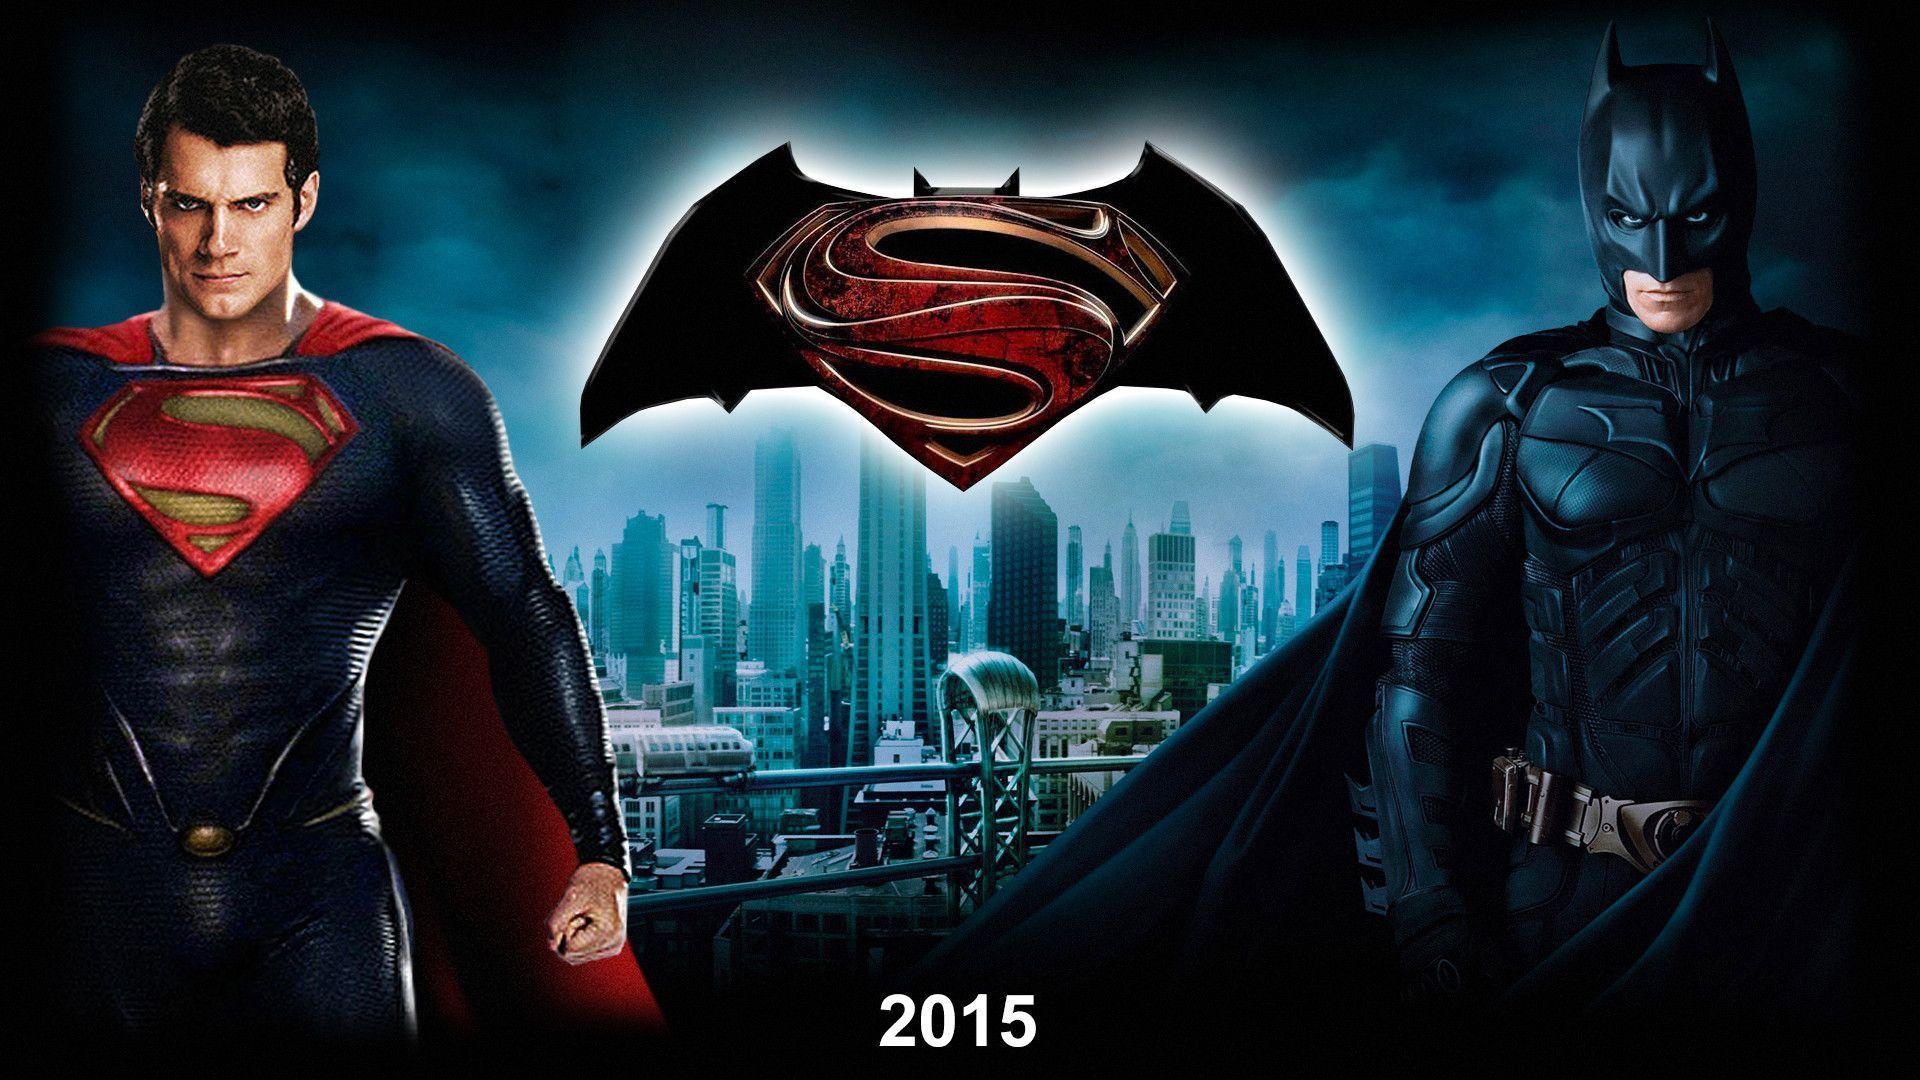 You searched for Superman Vs Batman Downloads Driver 2015